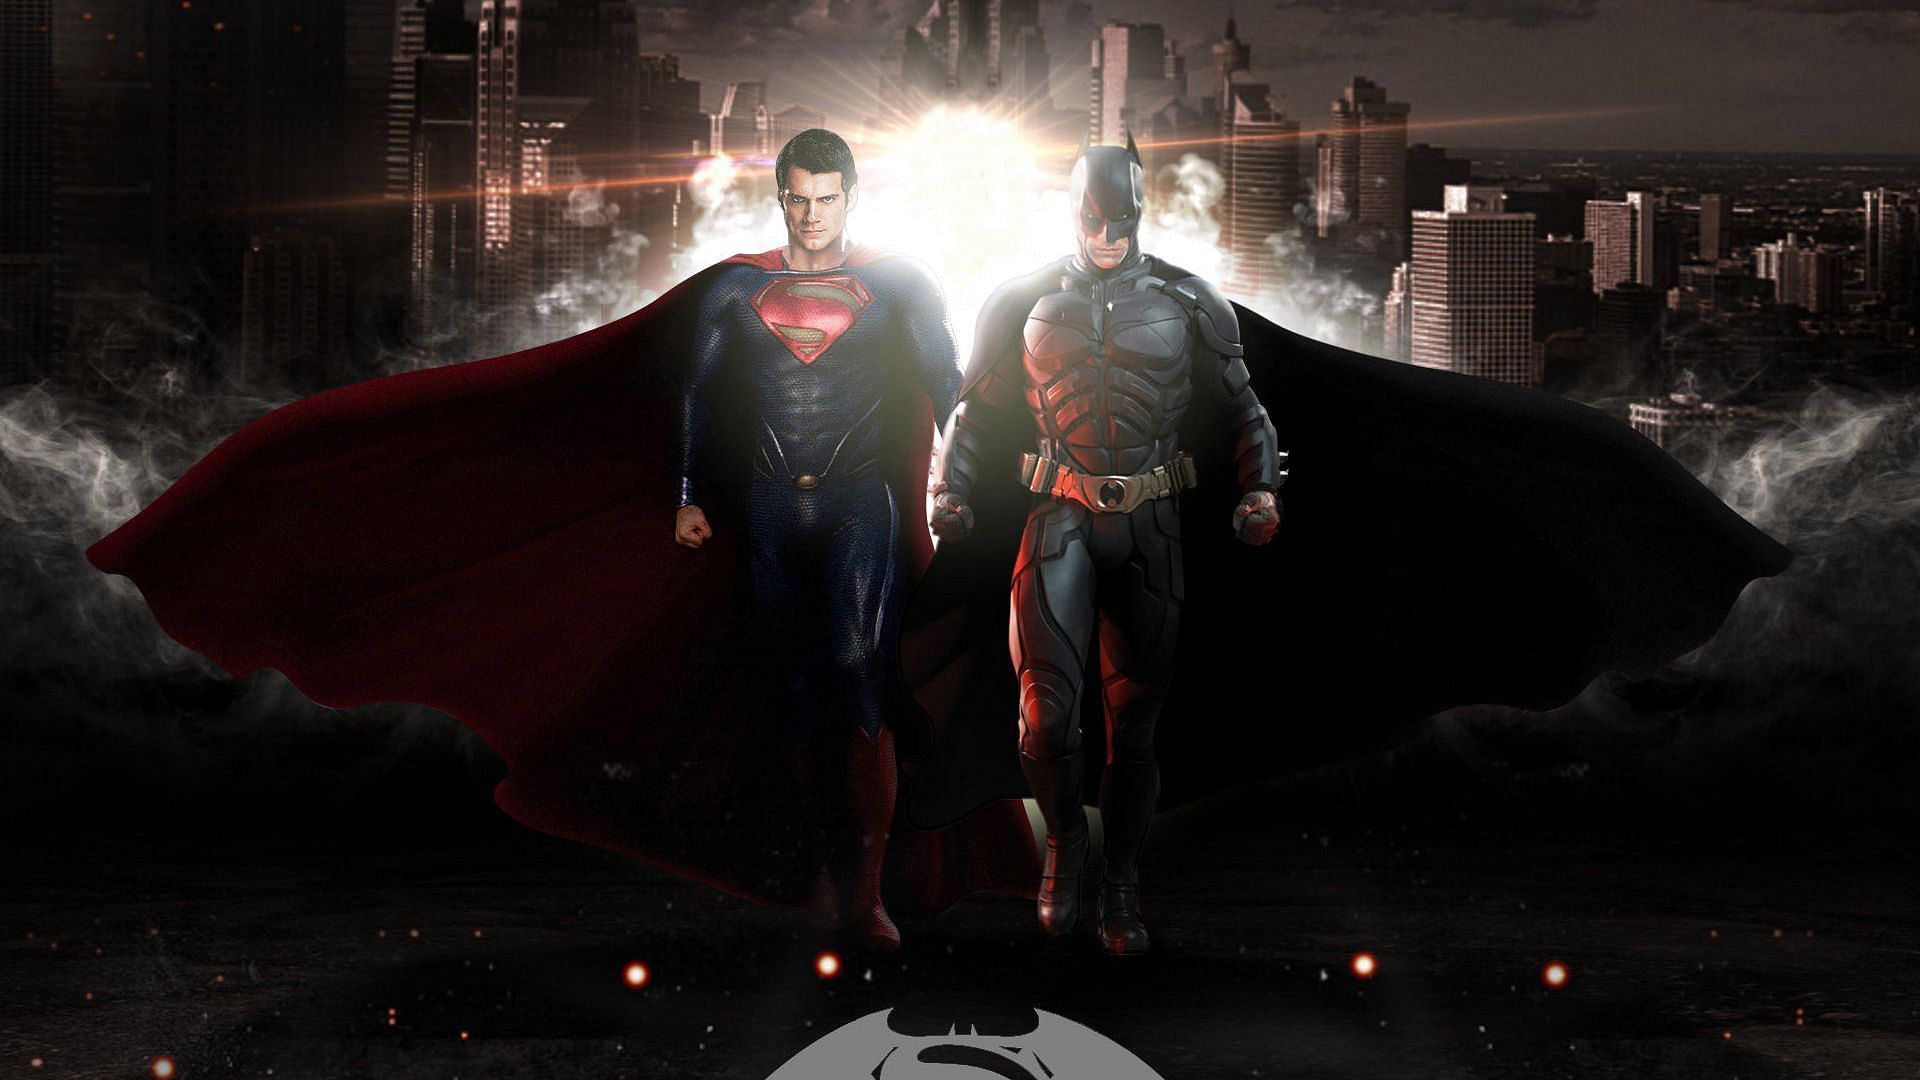 Superman vs Batman: Who would win in a fight?